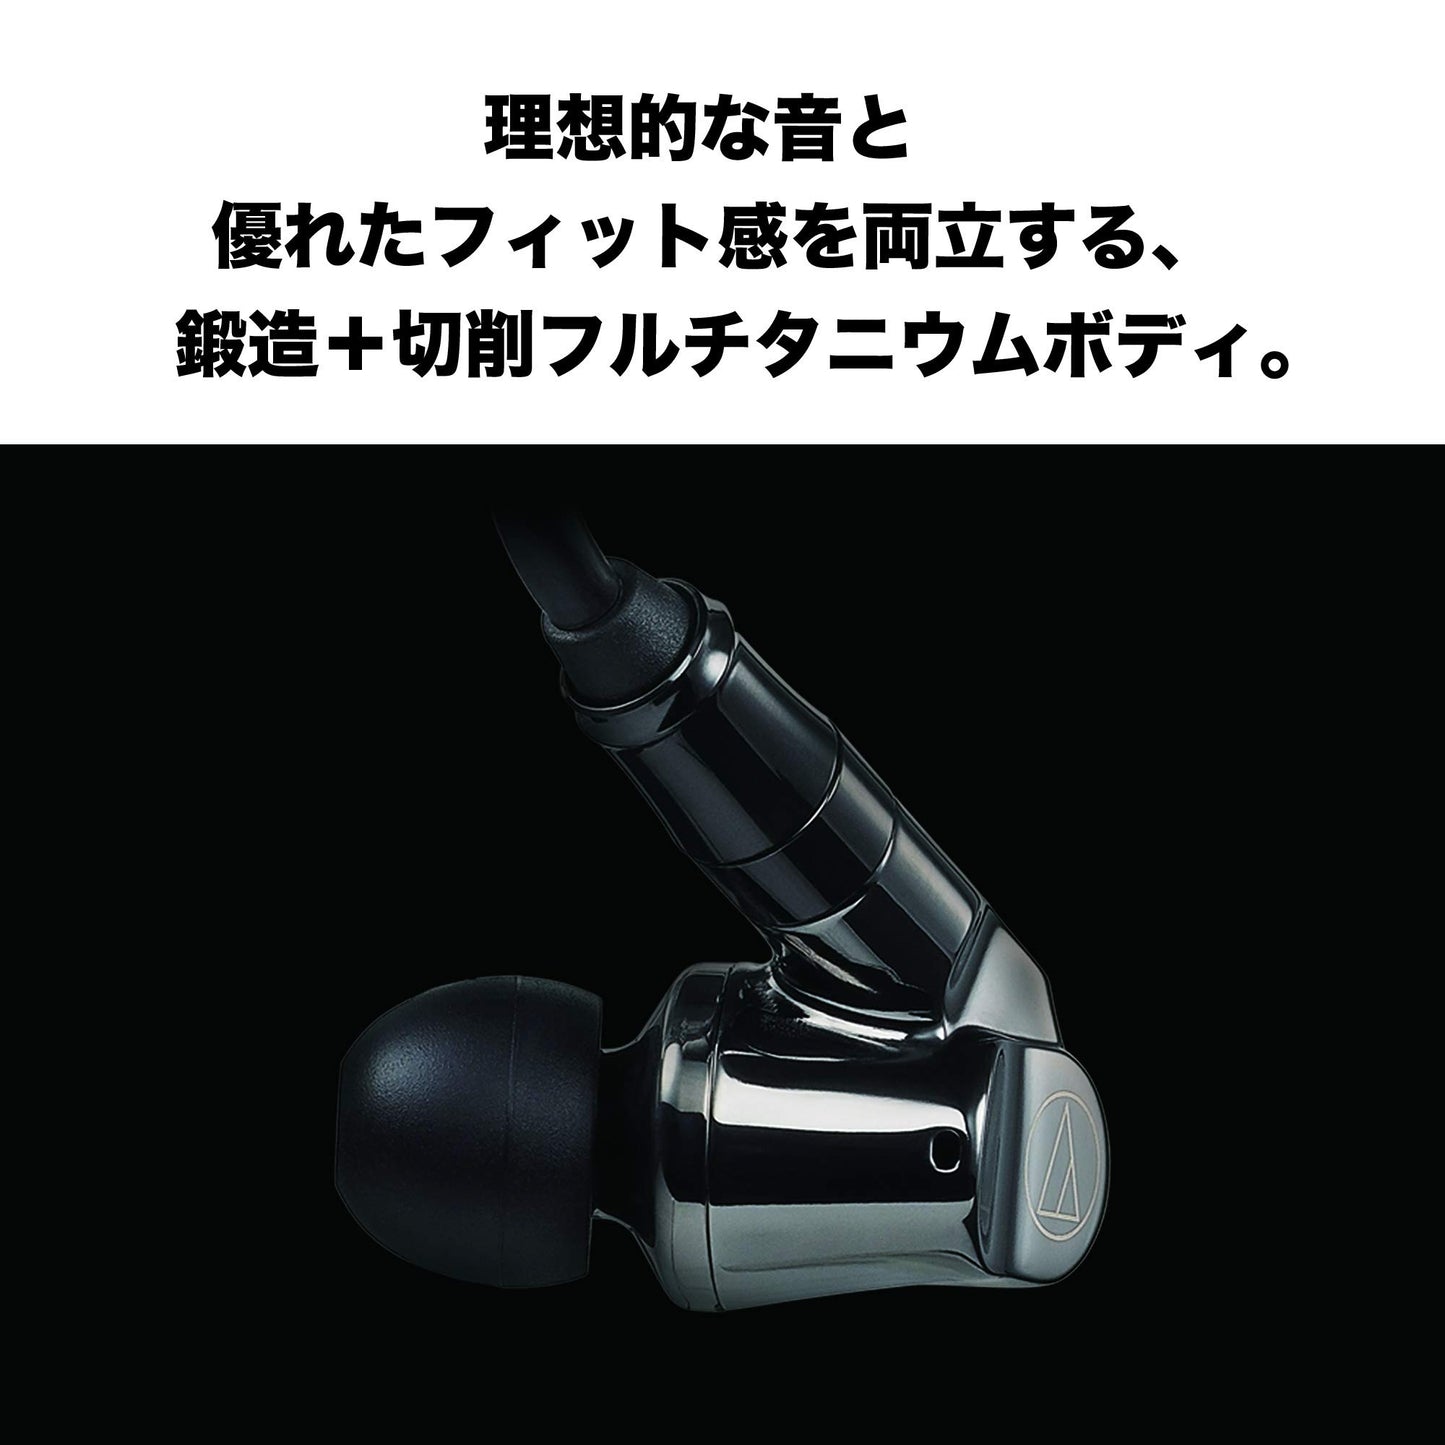 Audio-Technica ATH-IEX1 Hi-Res in-Ear Headphones, Black, Adjustable